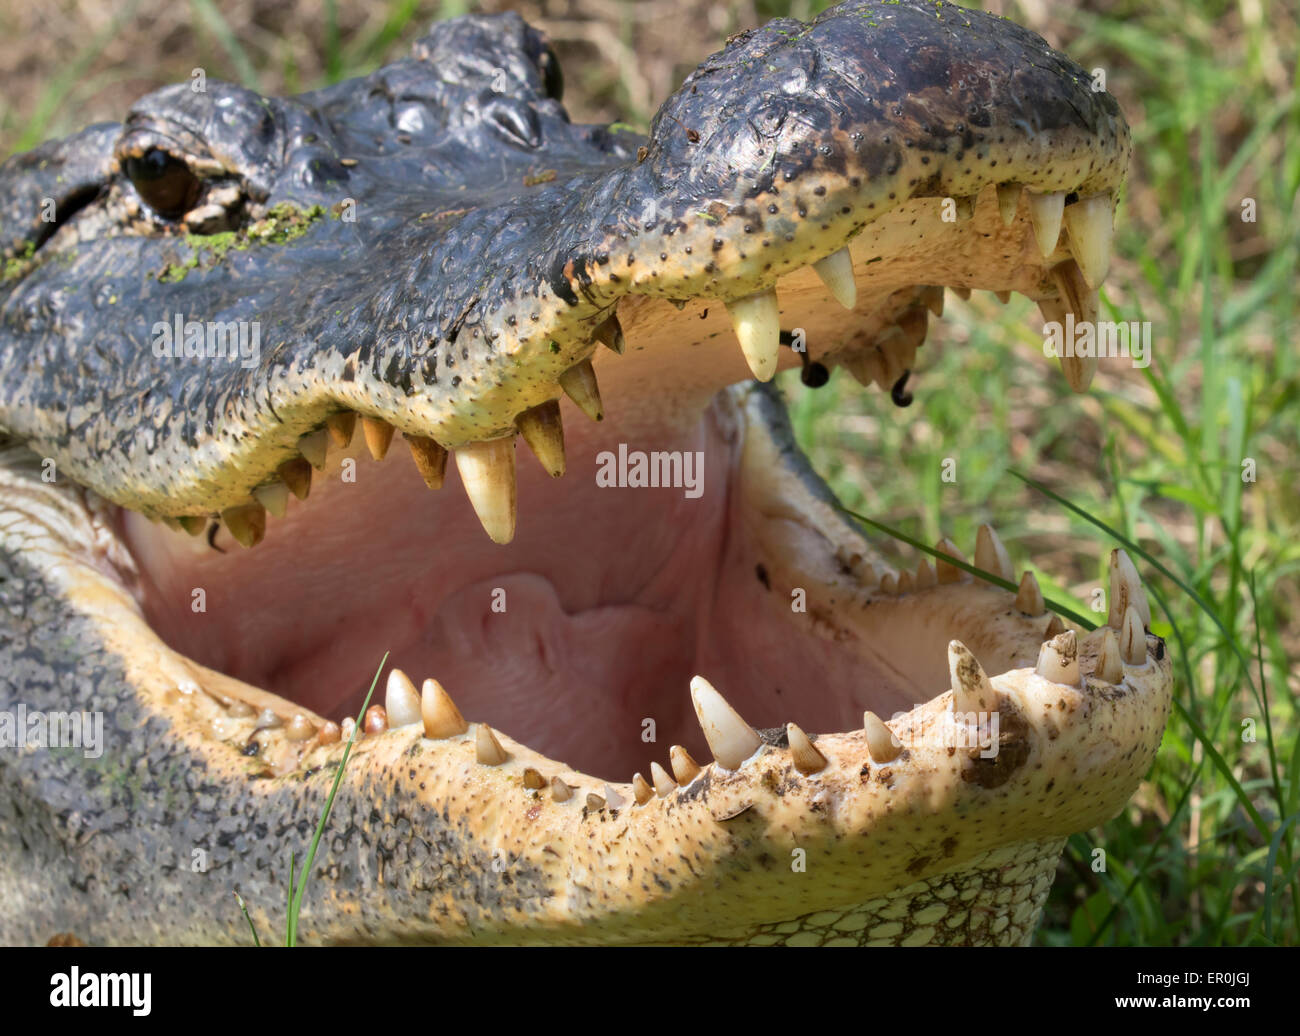 American alligator (Alligator mississippiensis) teeth, Brazos Bend state park, Needville, Texas, USA. Stock Photo